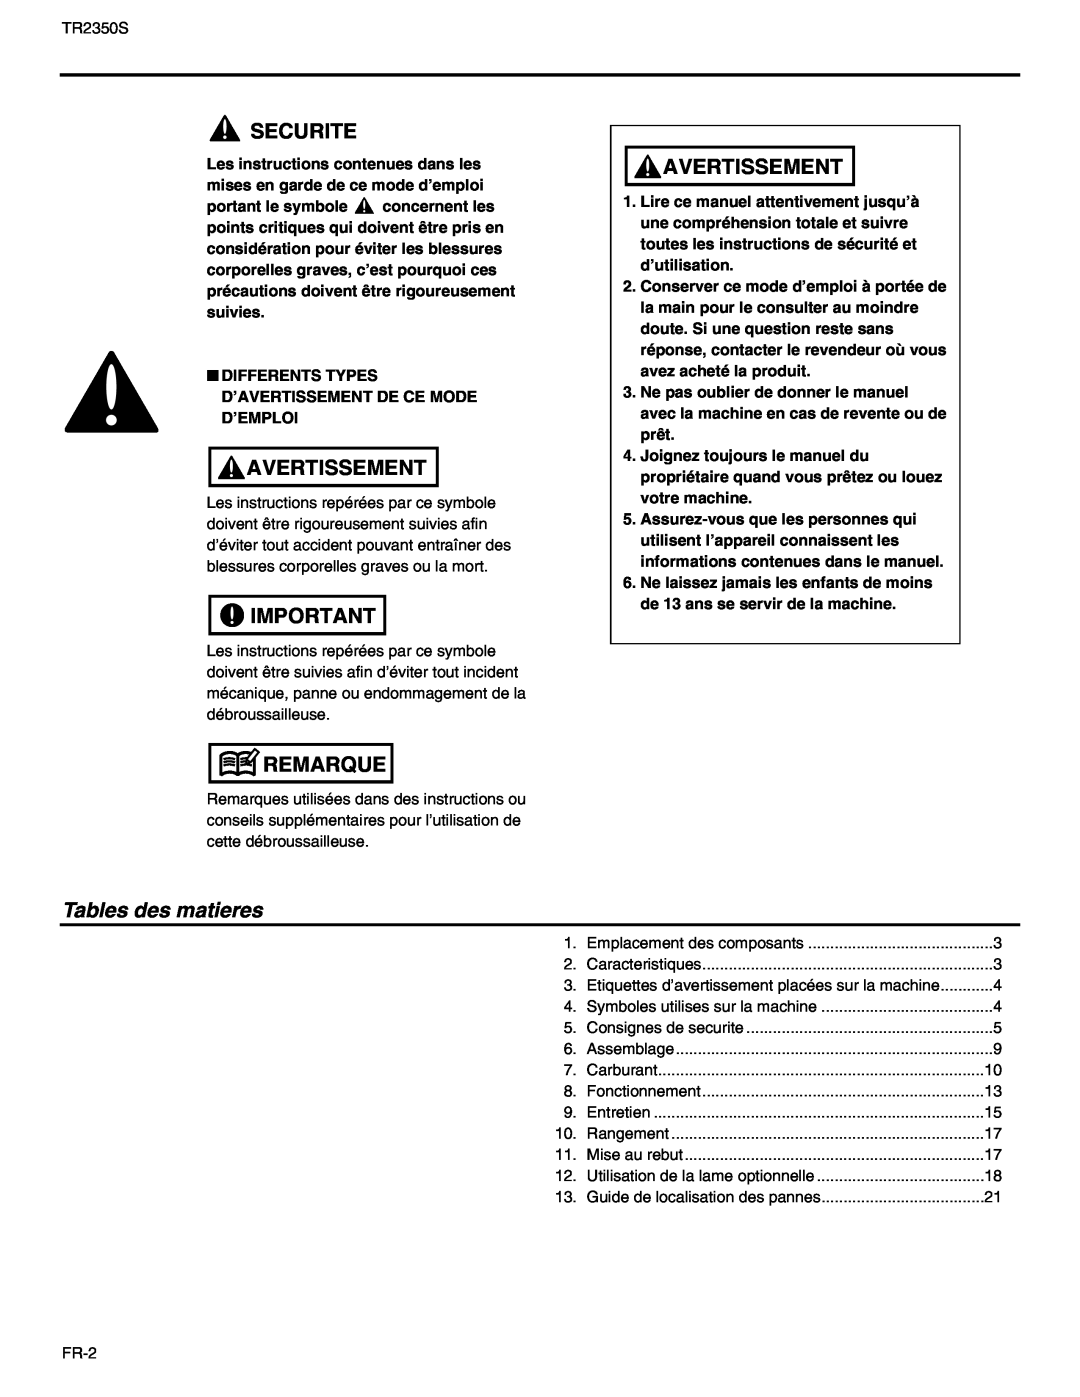 RedMax TR2350S manual Securite, Avertissement, Remarque, Tables des matieres 